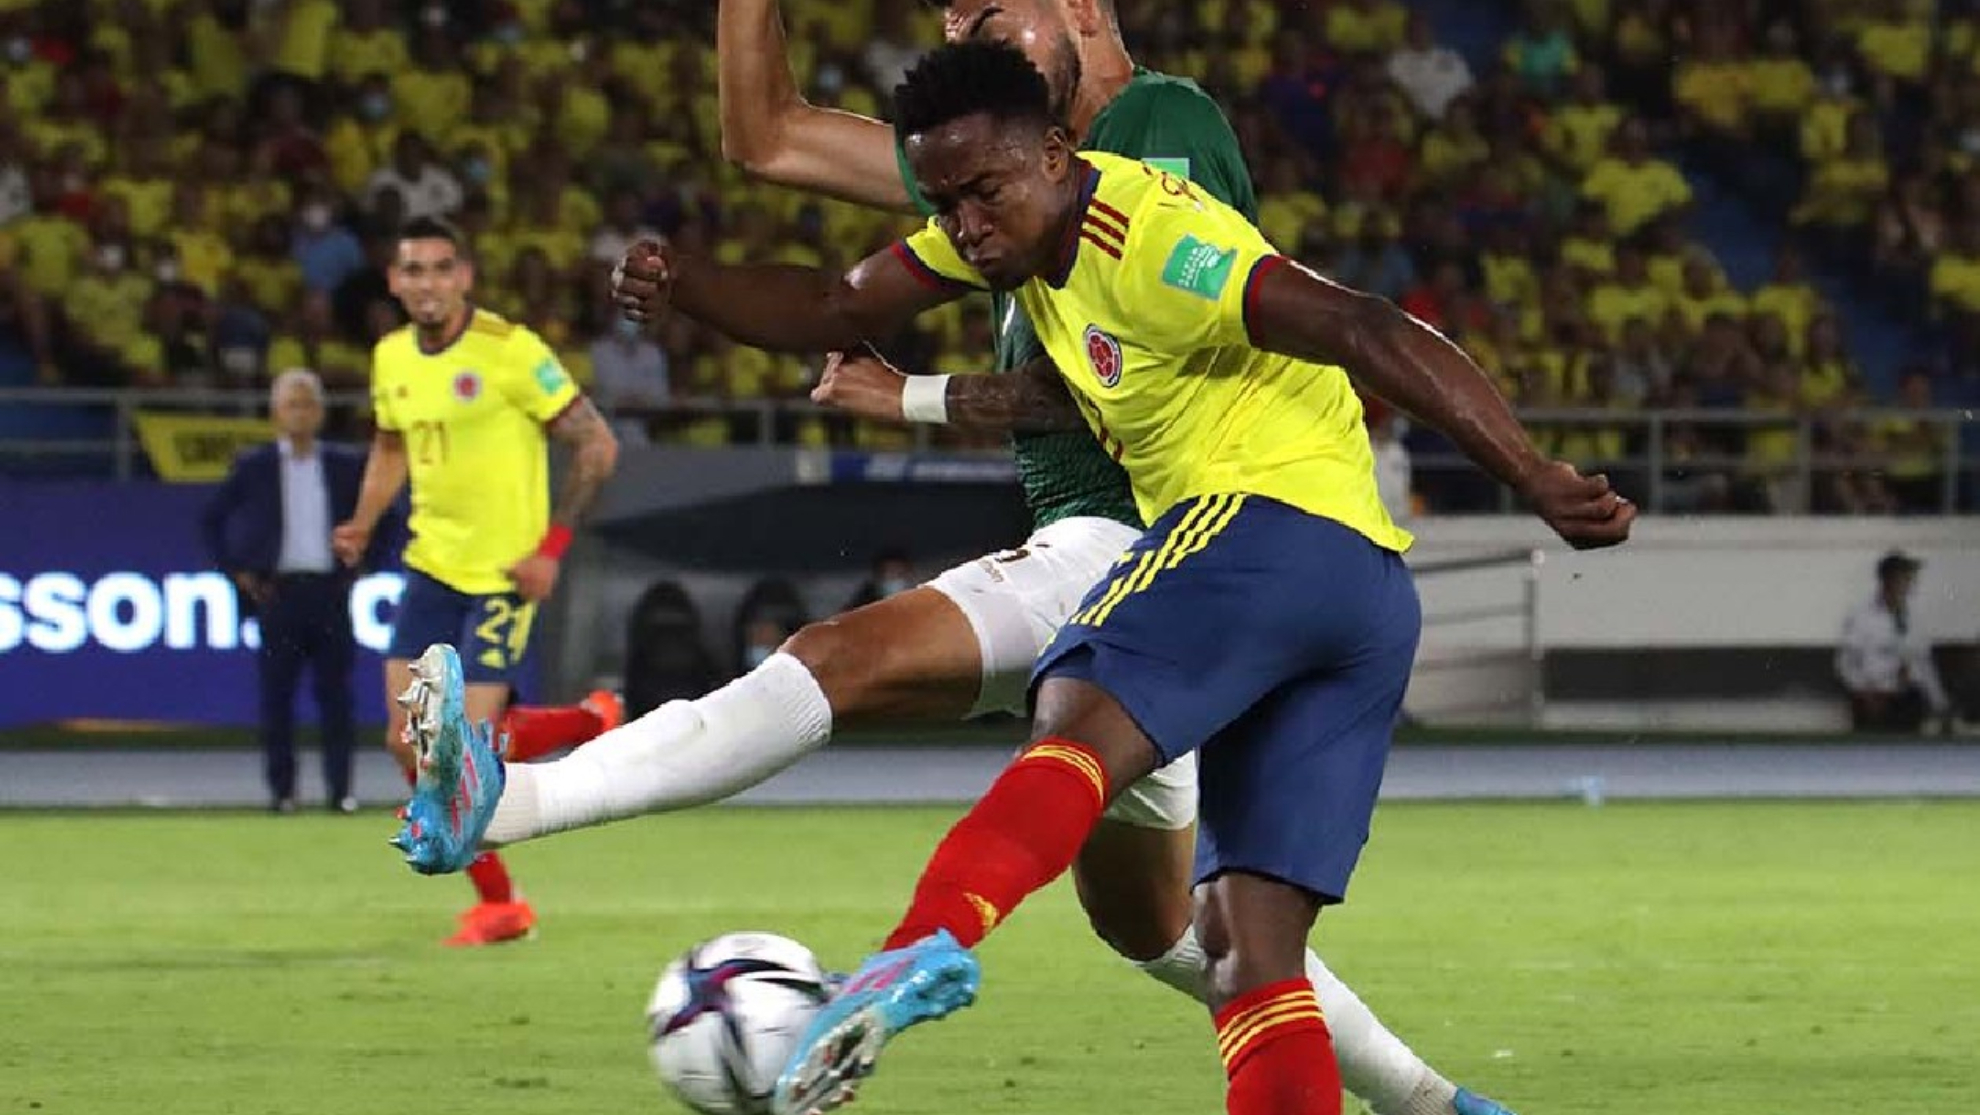  Selección Colombia confirma lesión de Luis Sinisterra